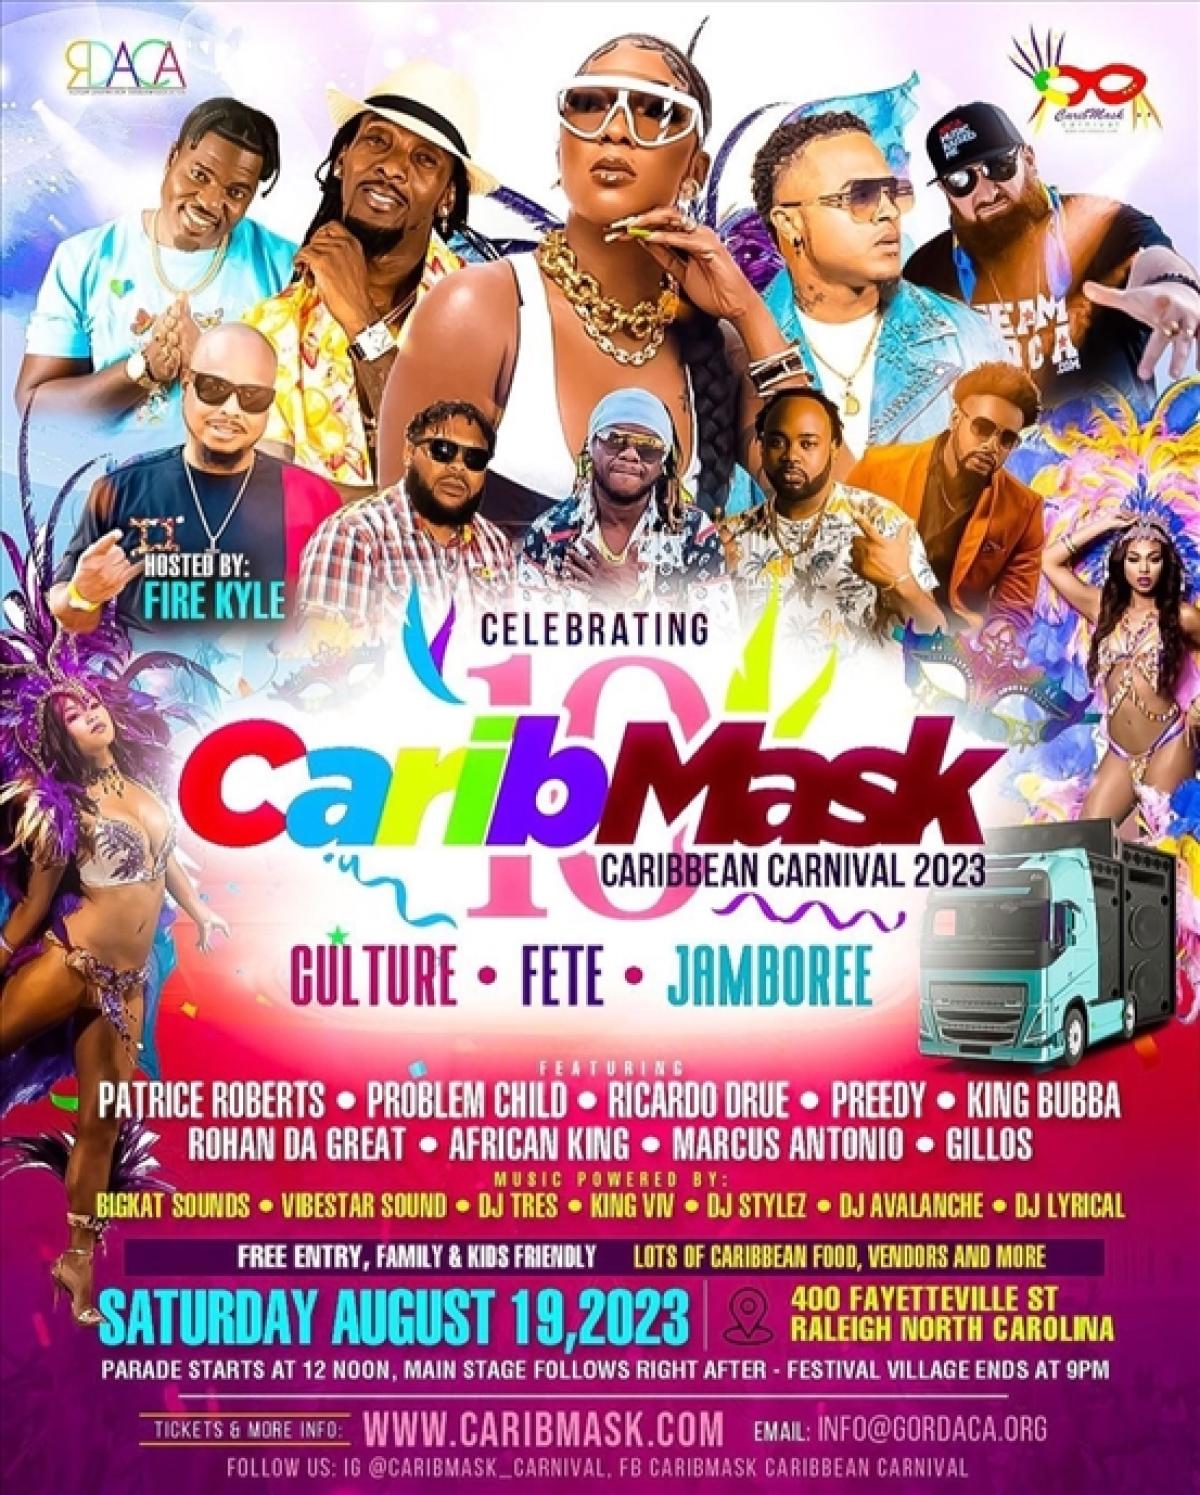 CaribMask Caribbean Carnival  flyer or graphic.